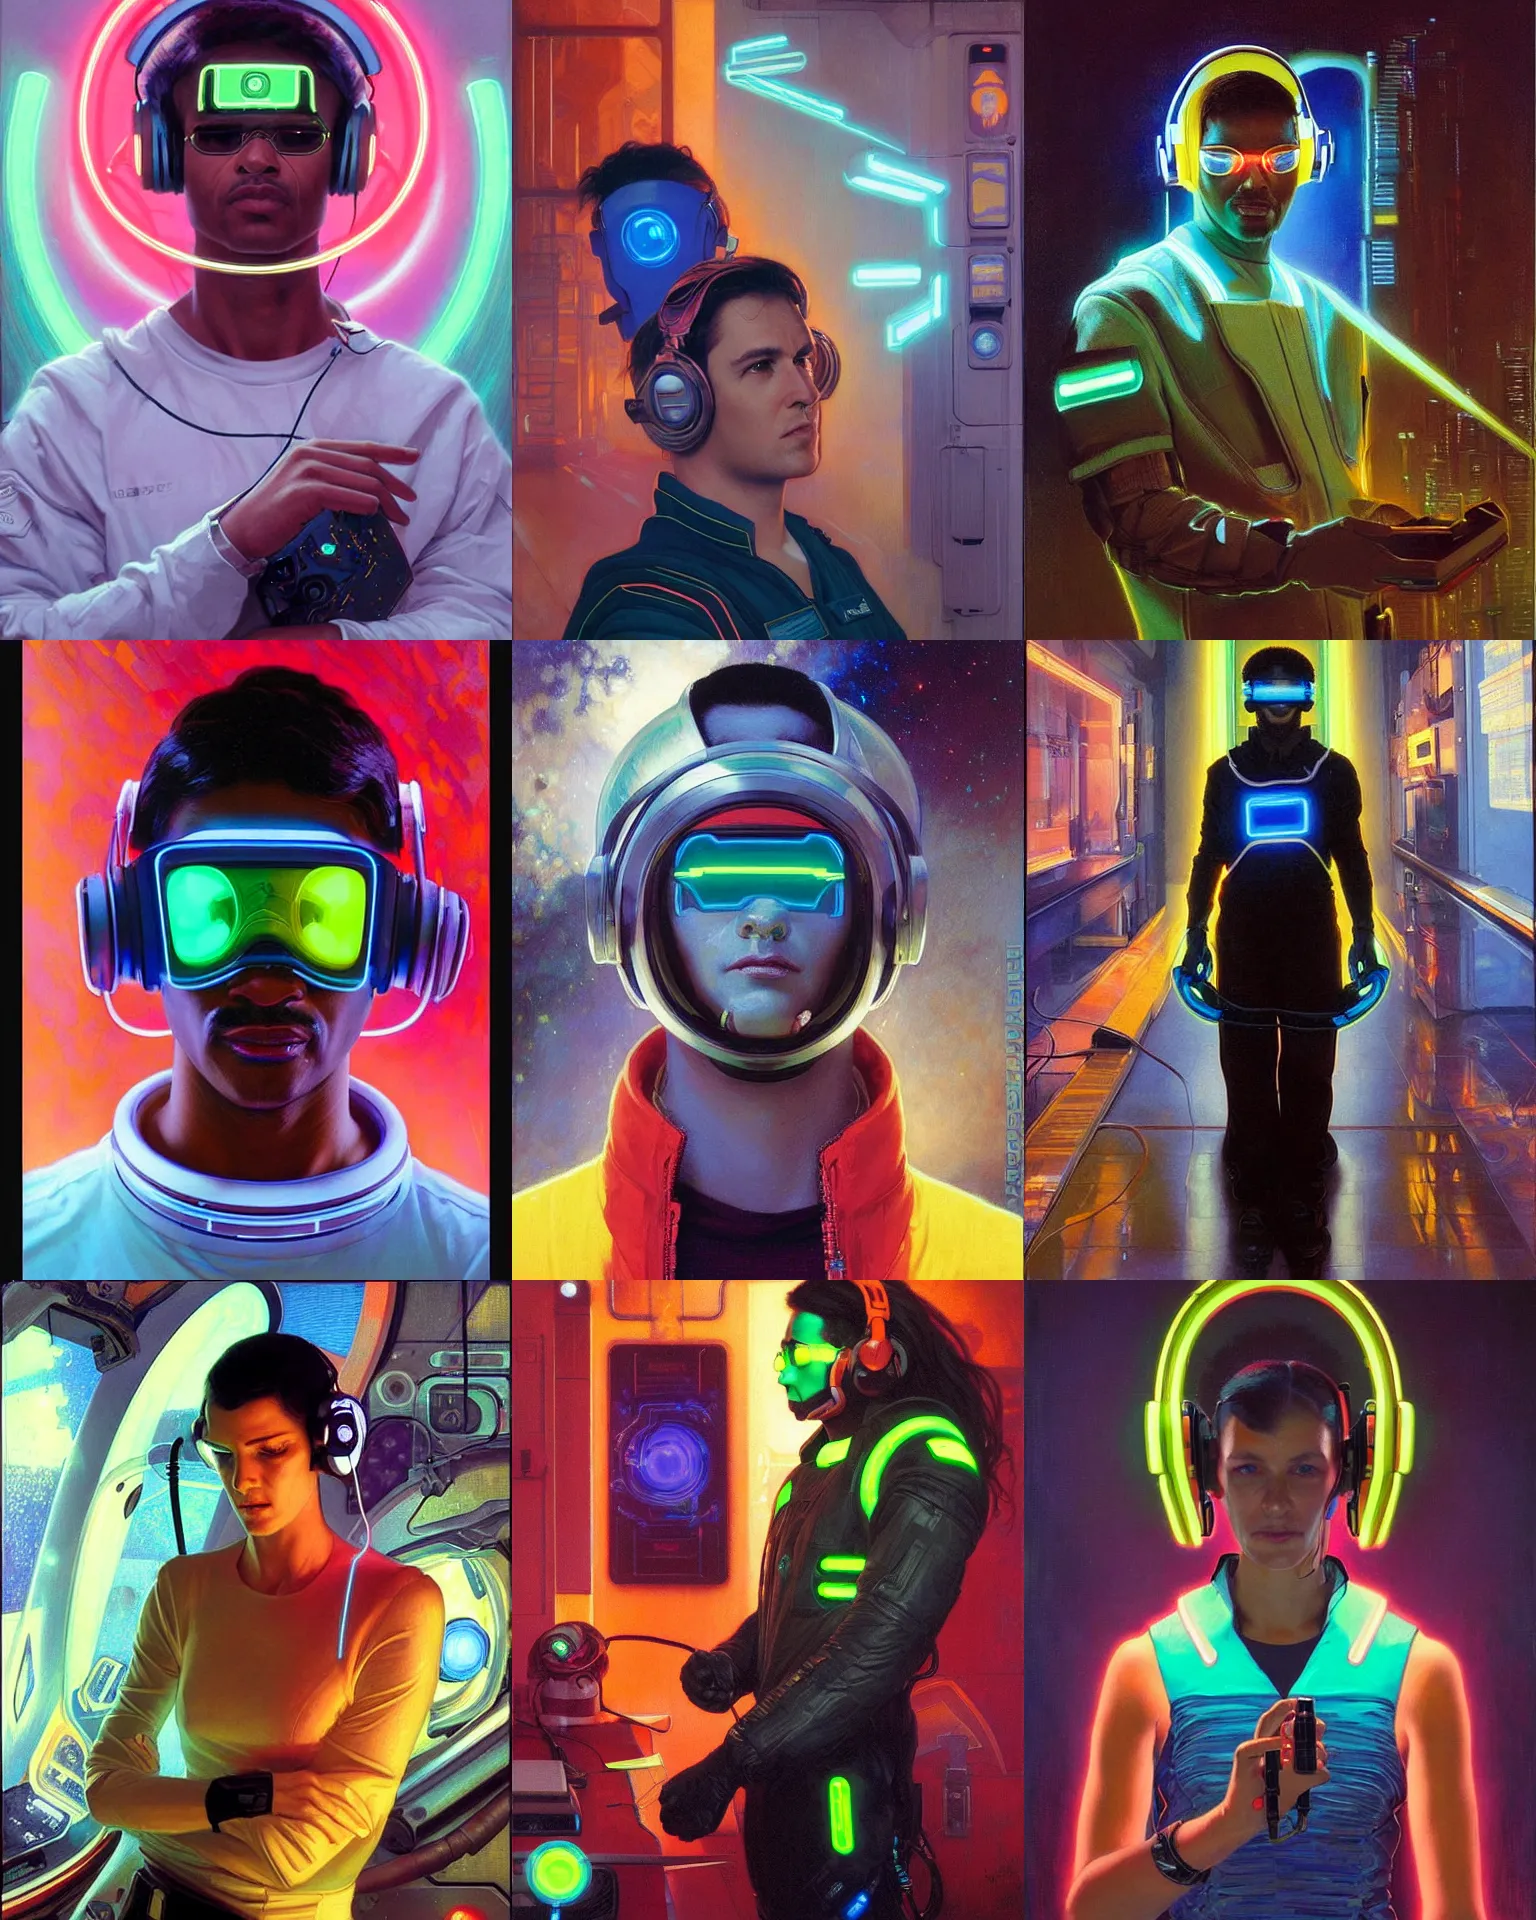 Prompt: neon cyberpunk programmer with glowing geordi visor over eyes and sleek headphones meme portrait painting by donato giancola, rhads, loish, alphonse mucha, mead schaeffer astronaut fashion photography